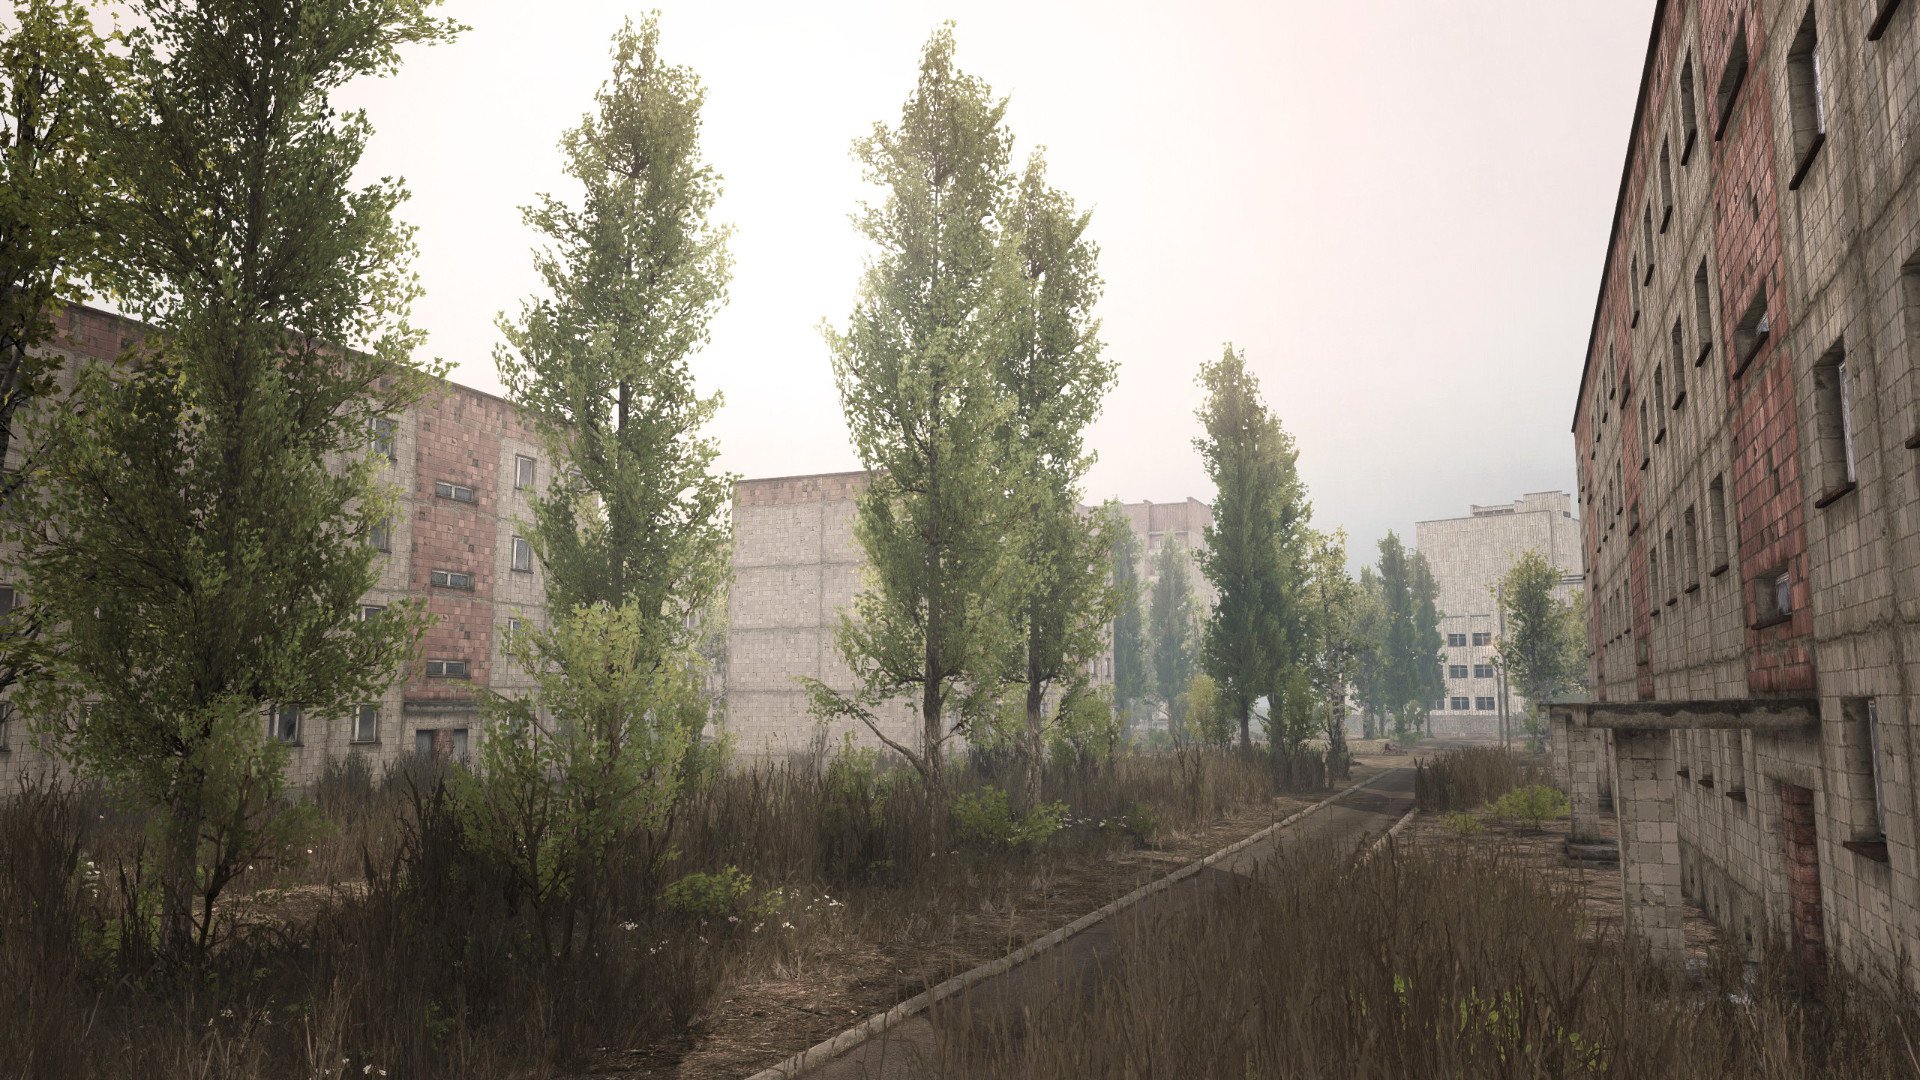 Spintires Chernobyl 14